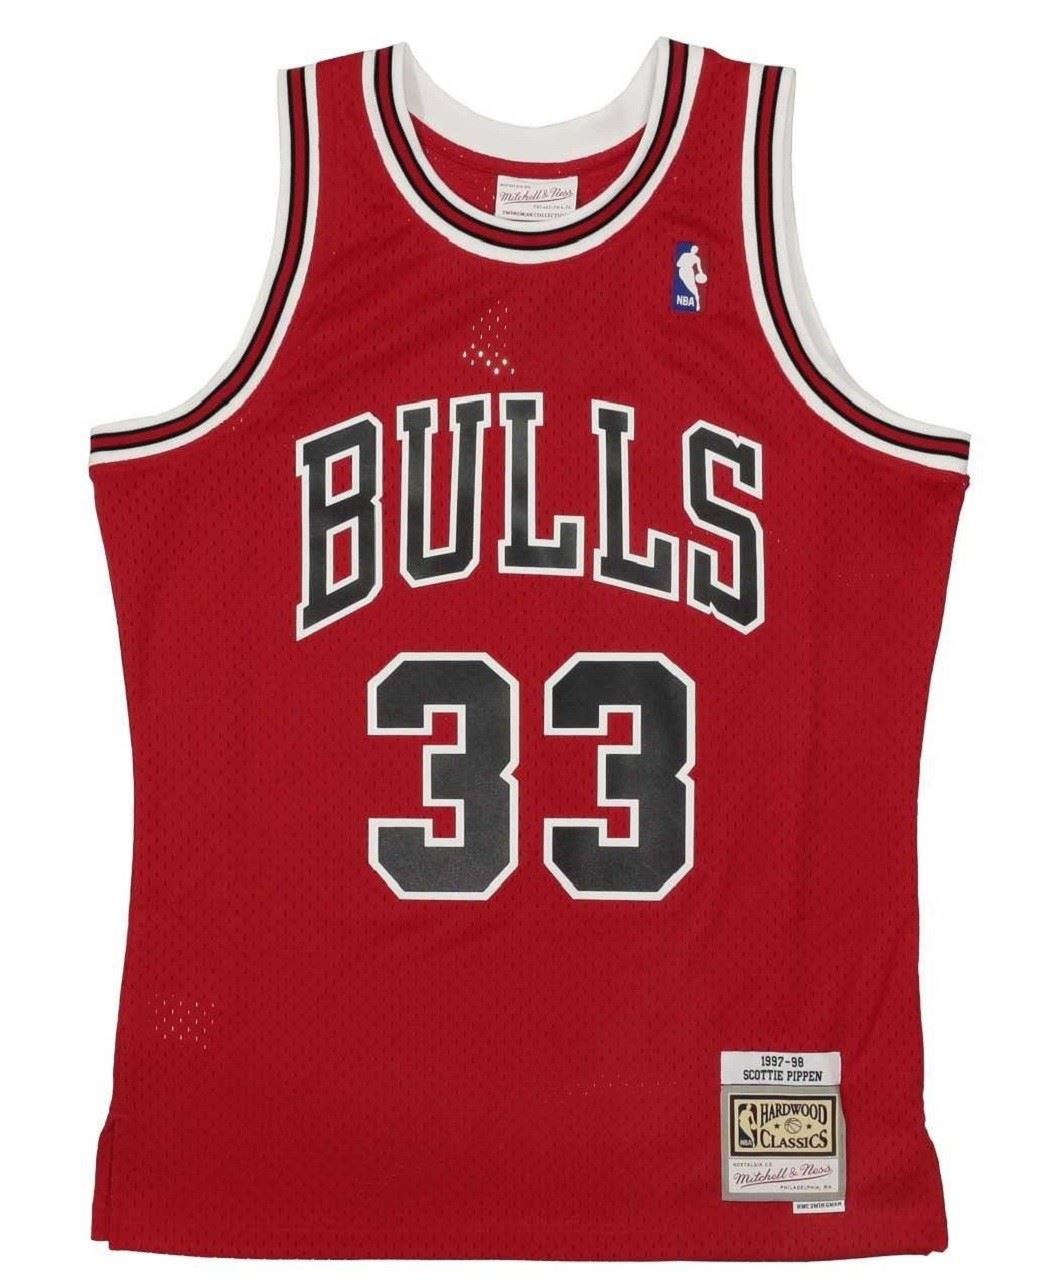 Scottie Pippen #33 Chicago Bulls NBA Kids Swingman Road Jersey Mitchell & Ness